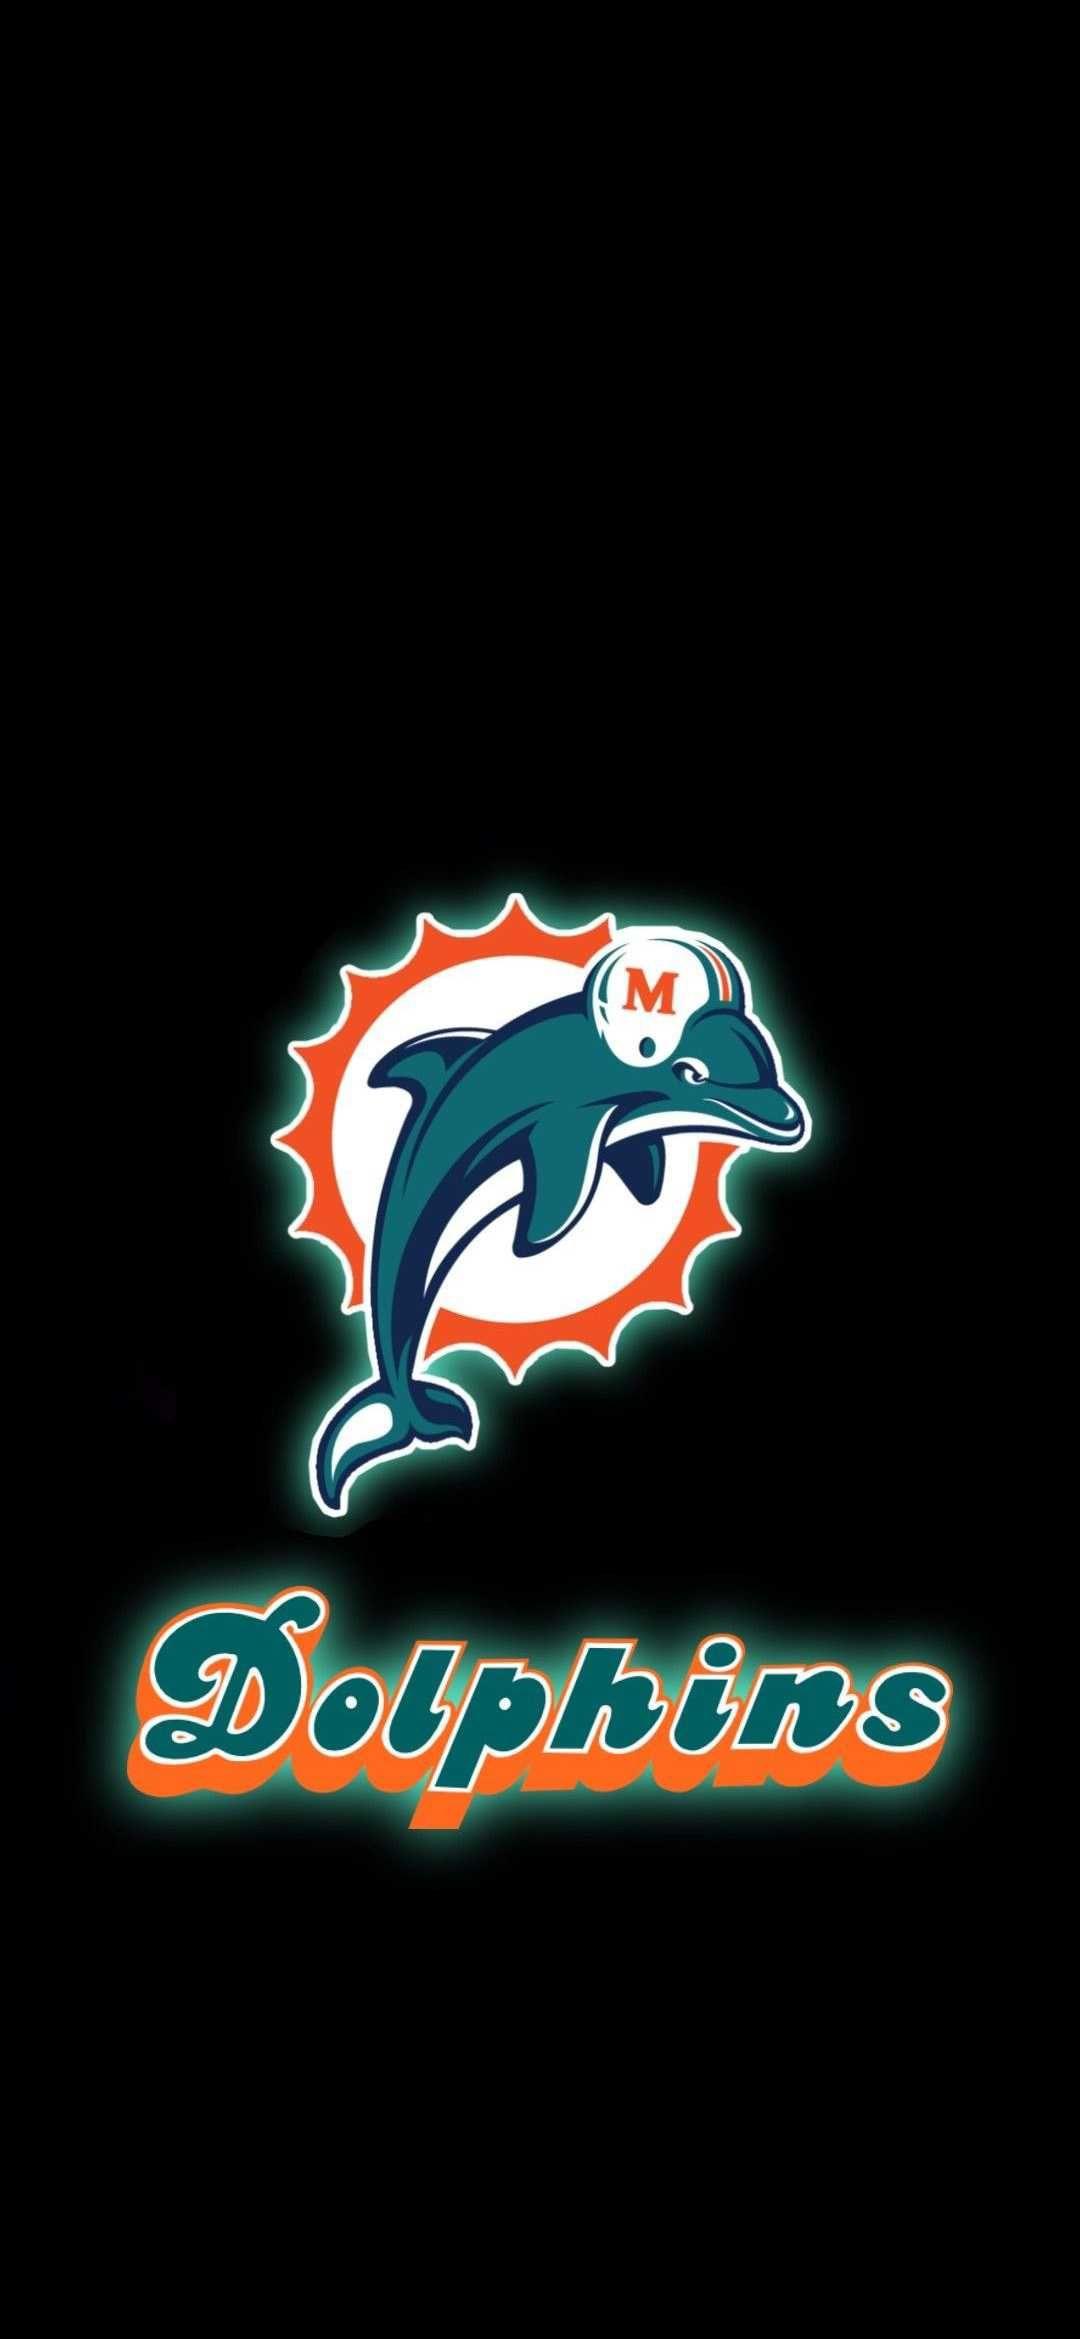 Miami Dolphins Wallpaper Ixpap